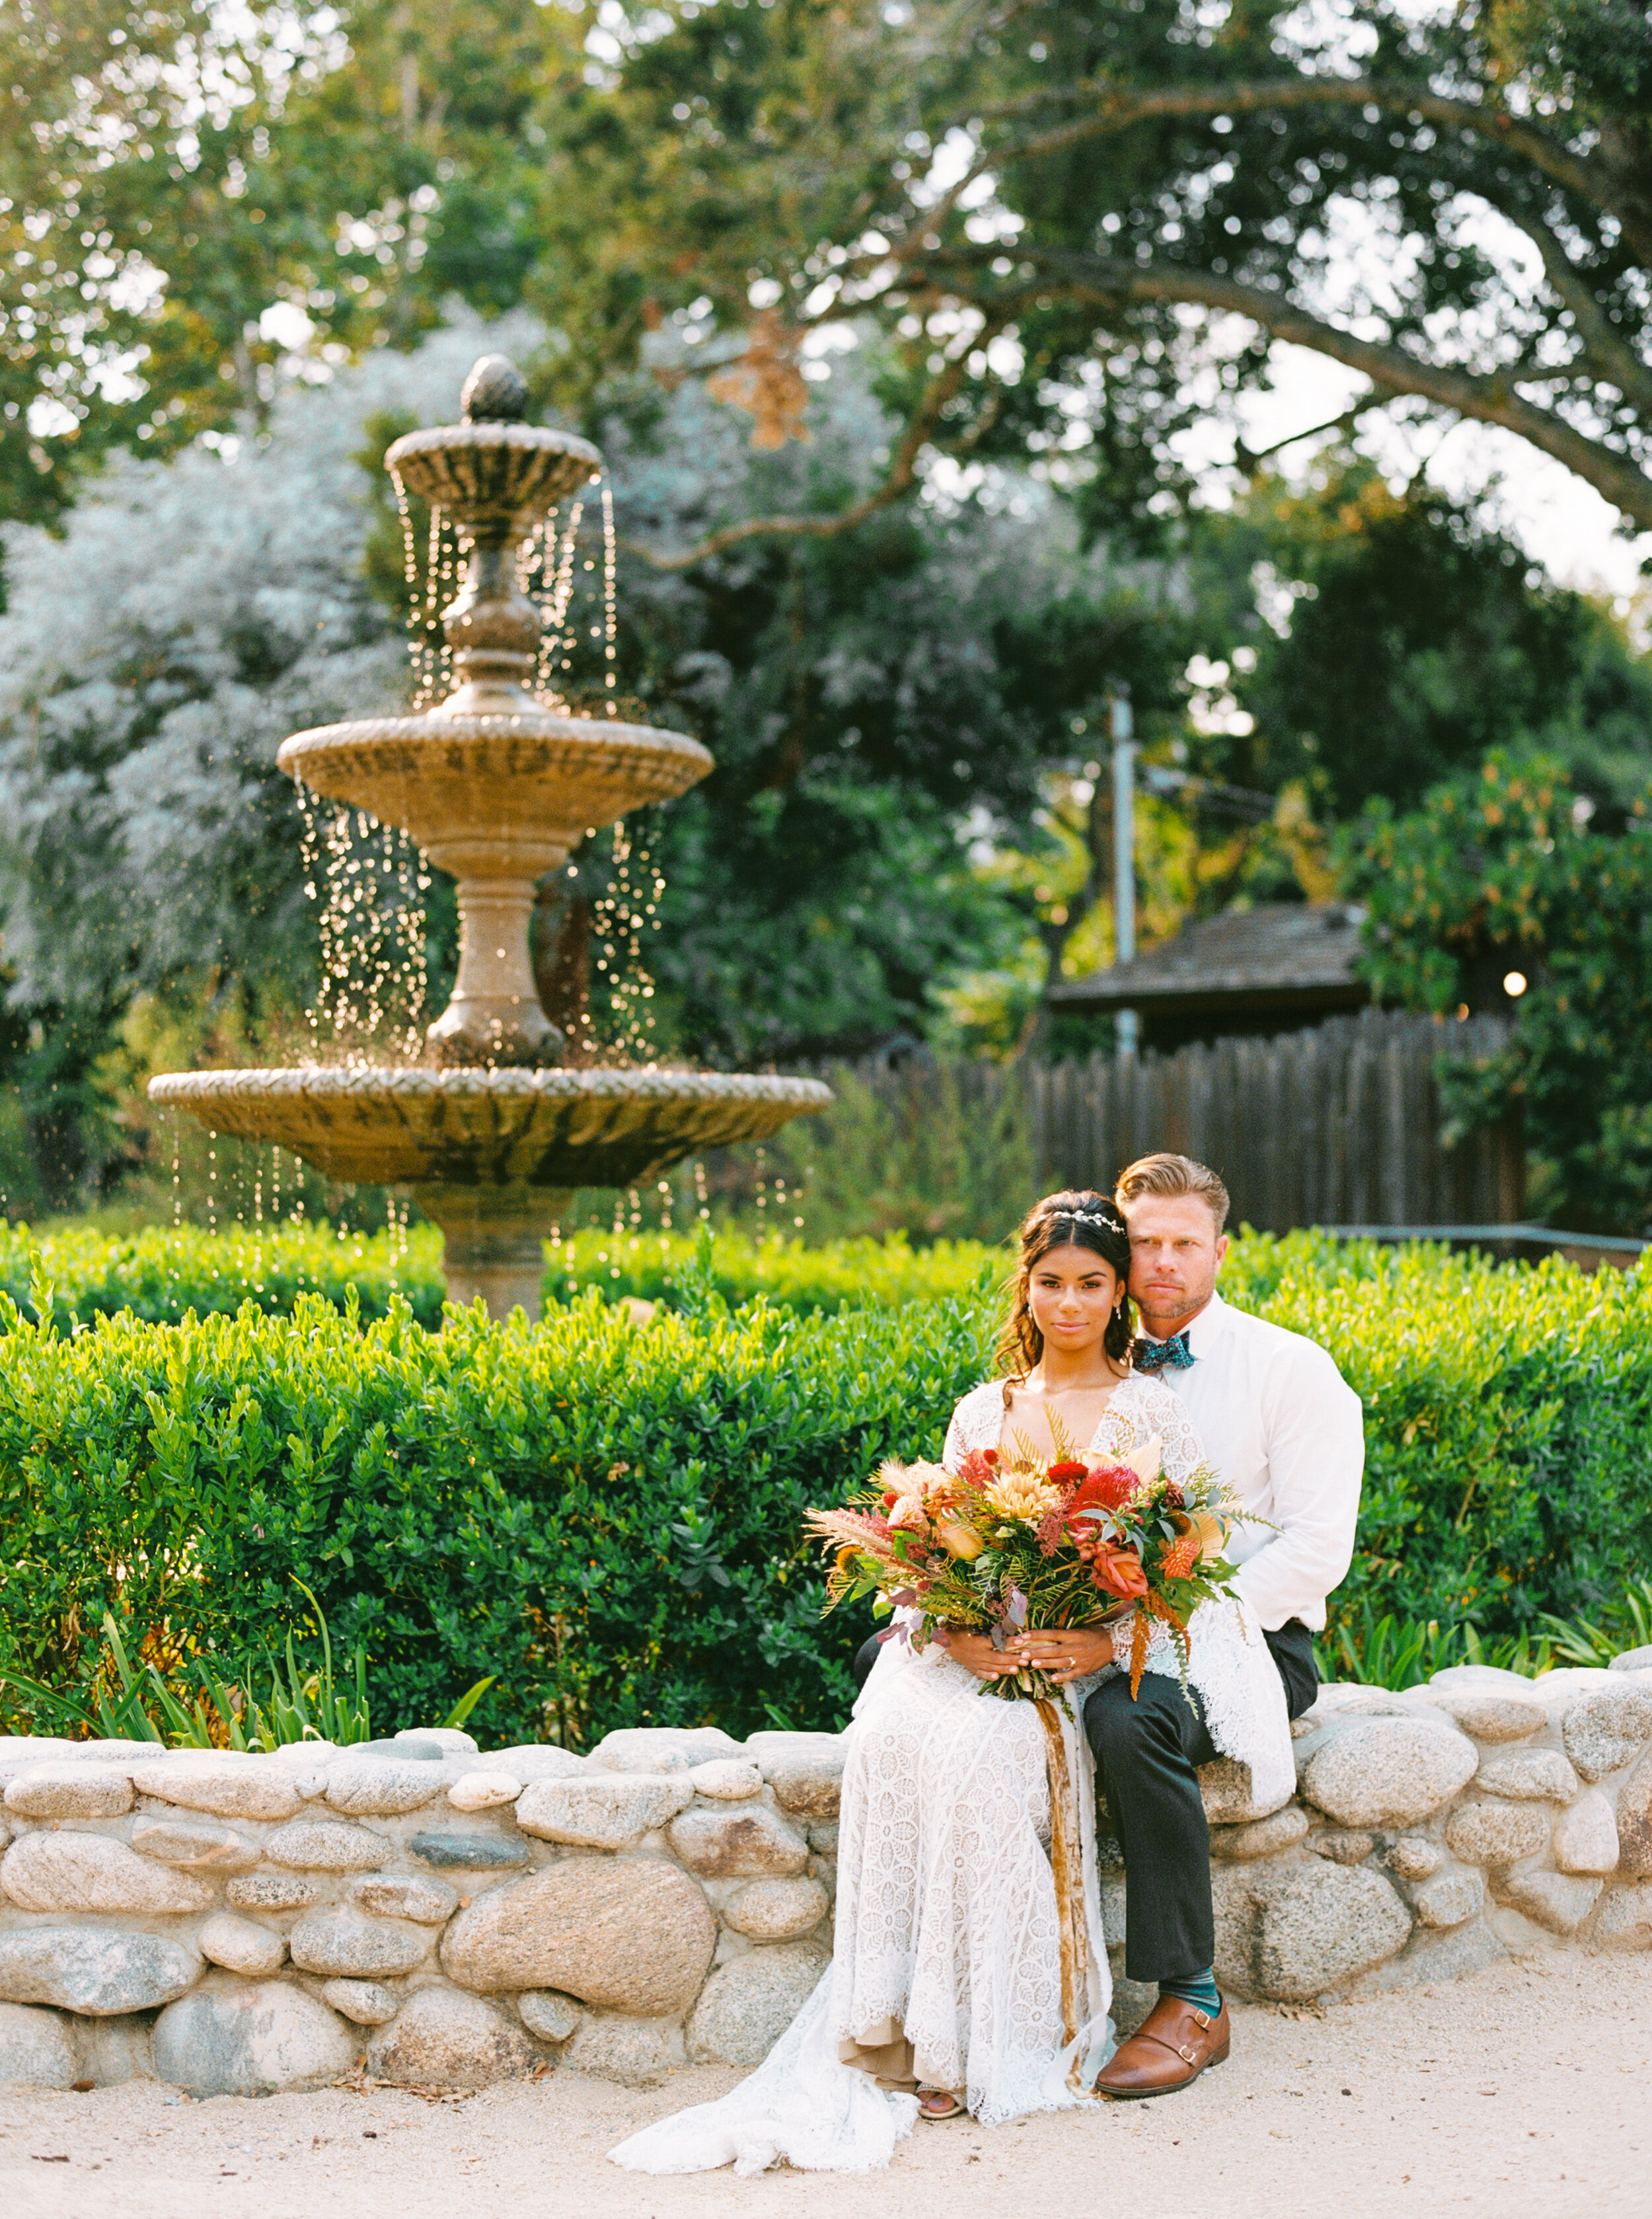 Sarahi Hadden - An Earthy Summer Boho Inspired Wedding with Sunset Hues at Gardener Ranch-22.jpg